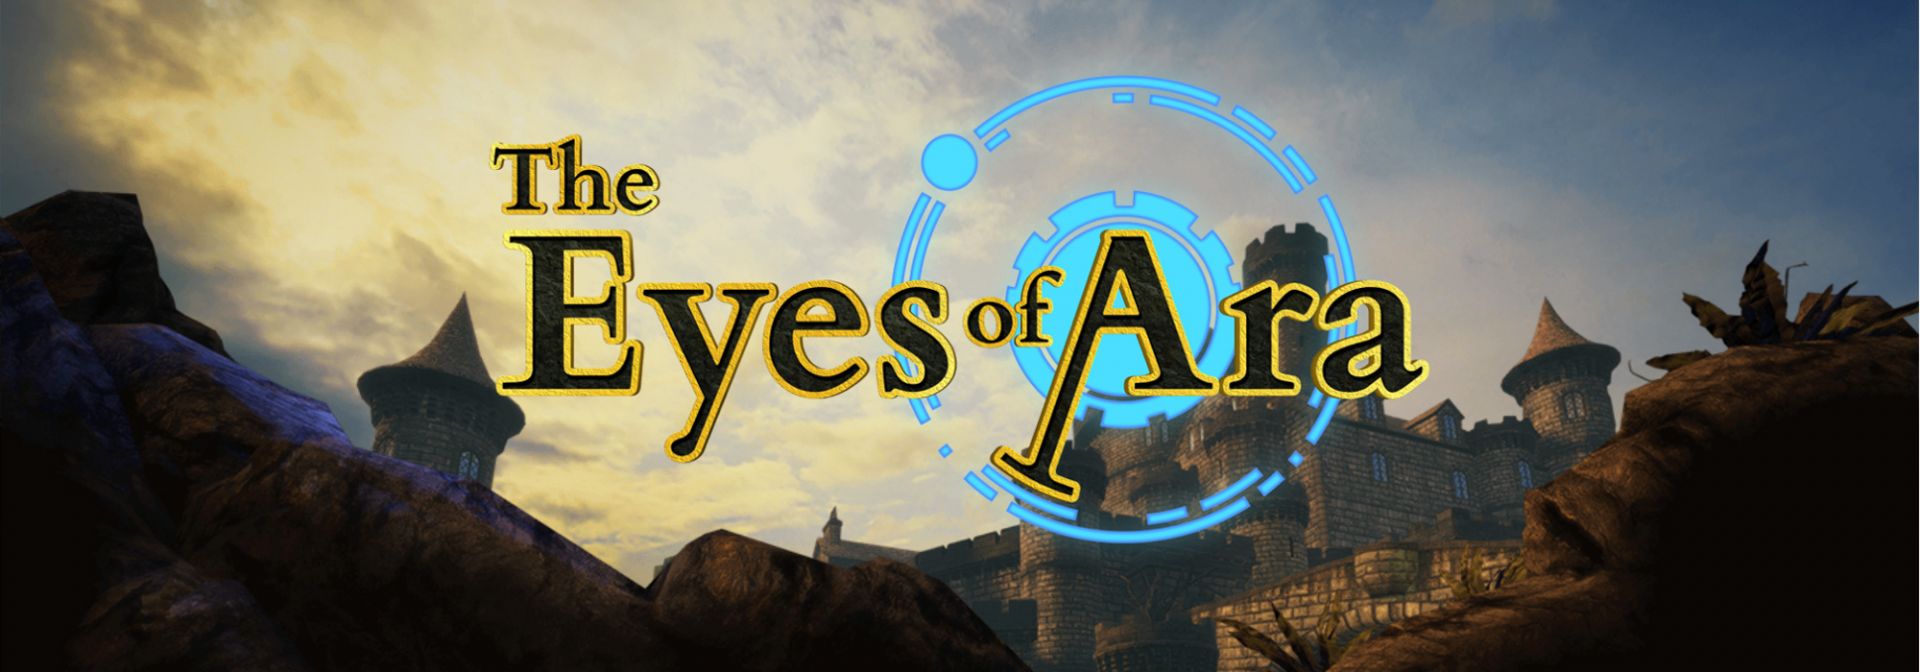 the eyes of ara blue orb locations